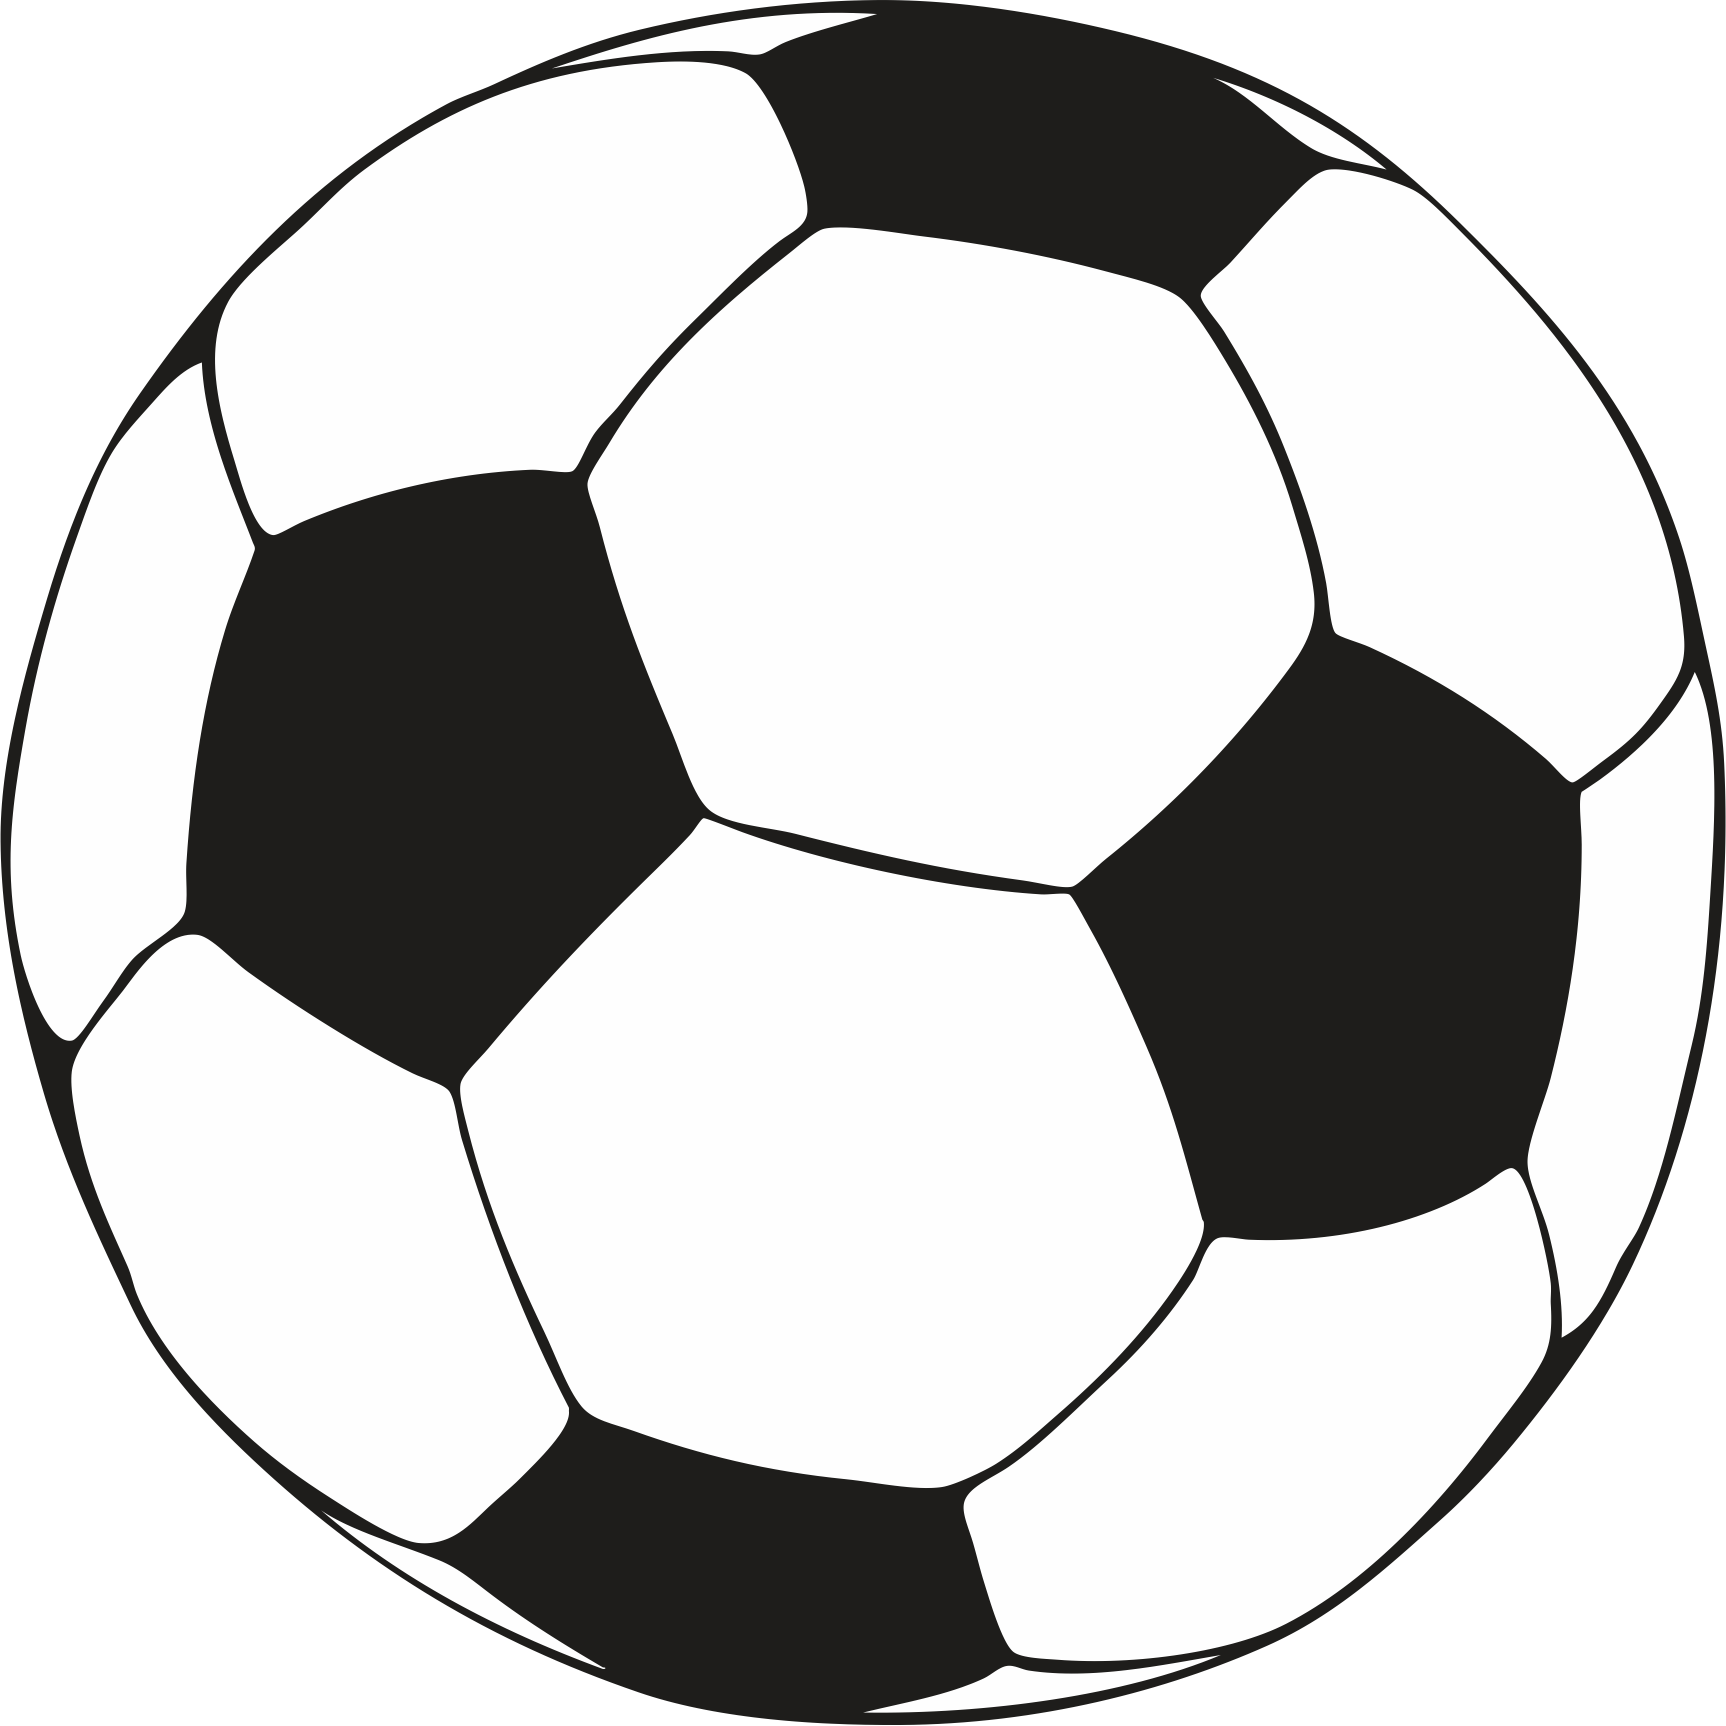 Soccer ball clipart | Fotolip.com Rich image and wallpaper